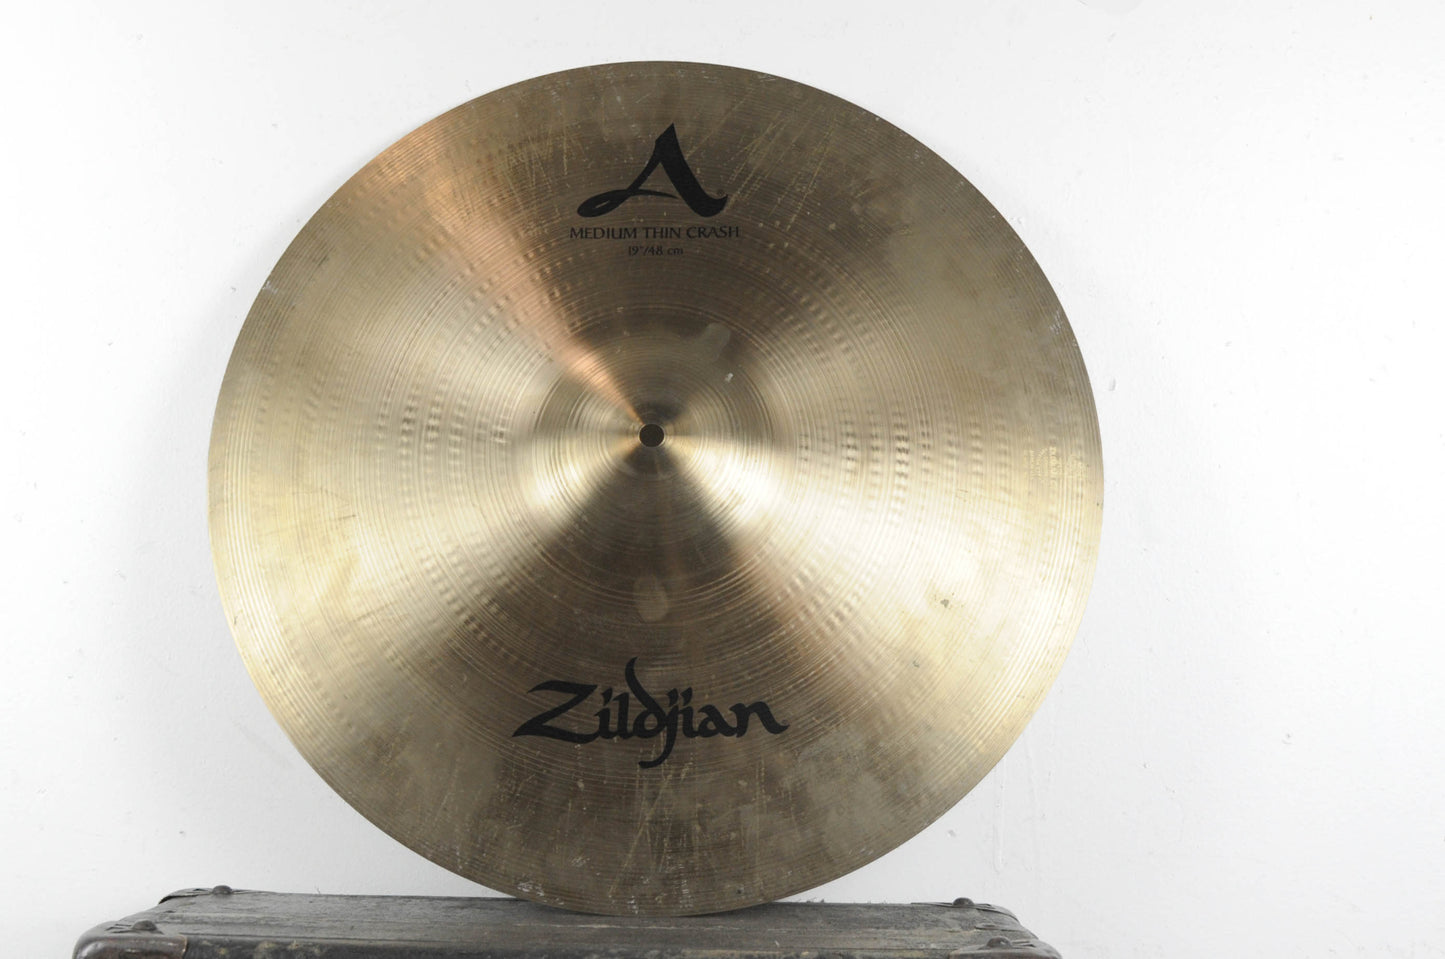 Zildjian A 19" Medium Thin Crash Cymbal 1712g